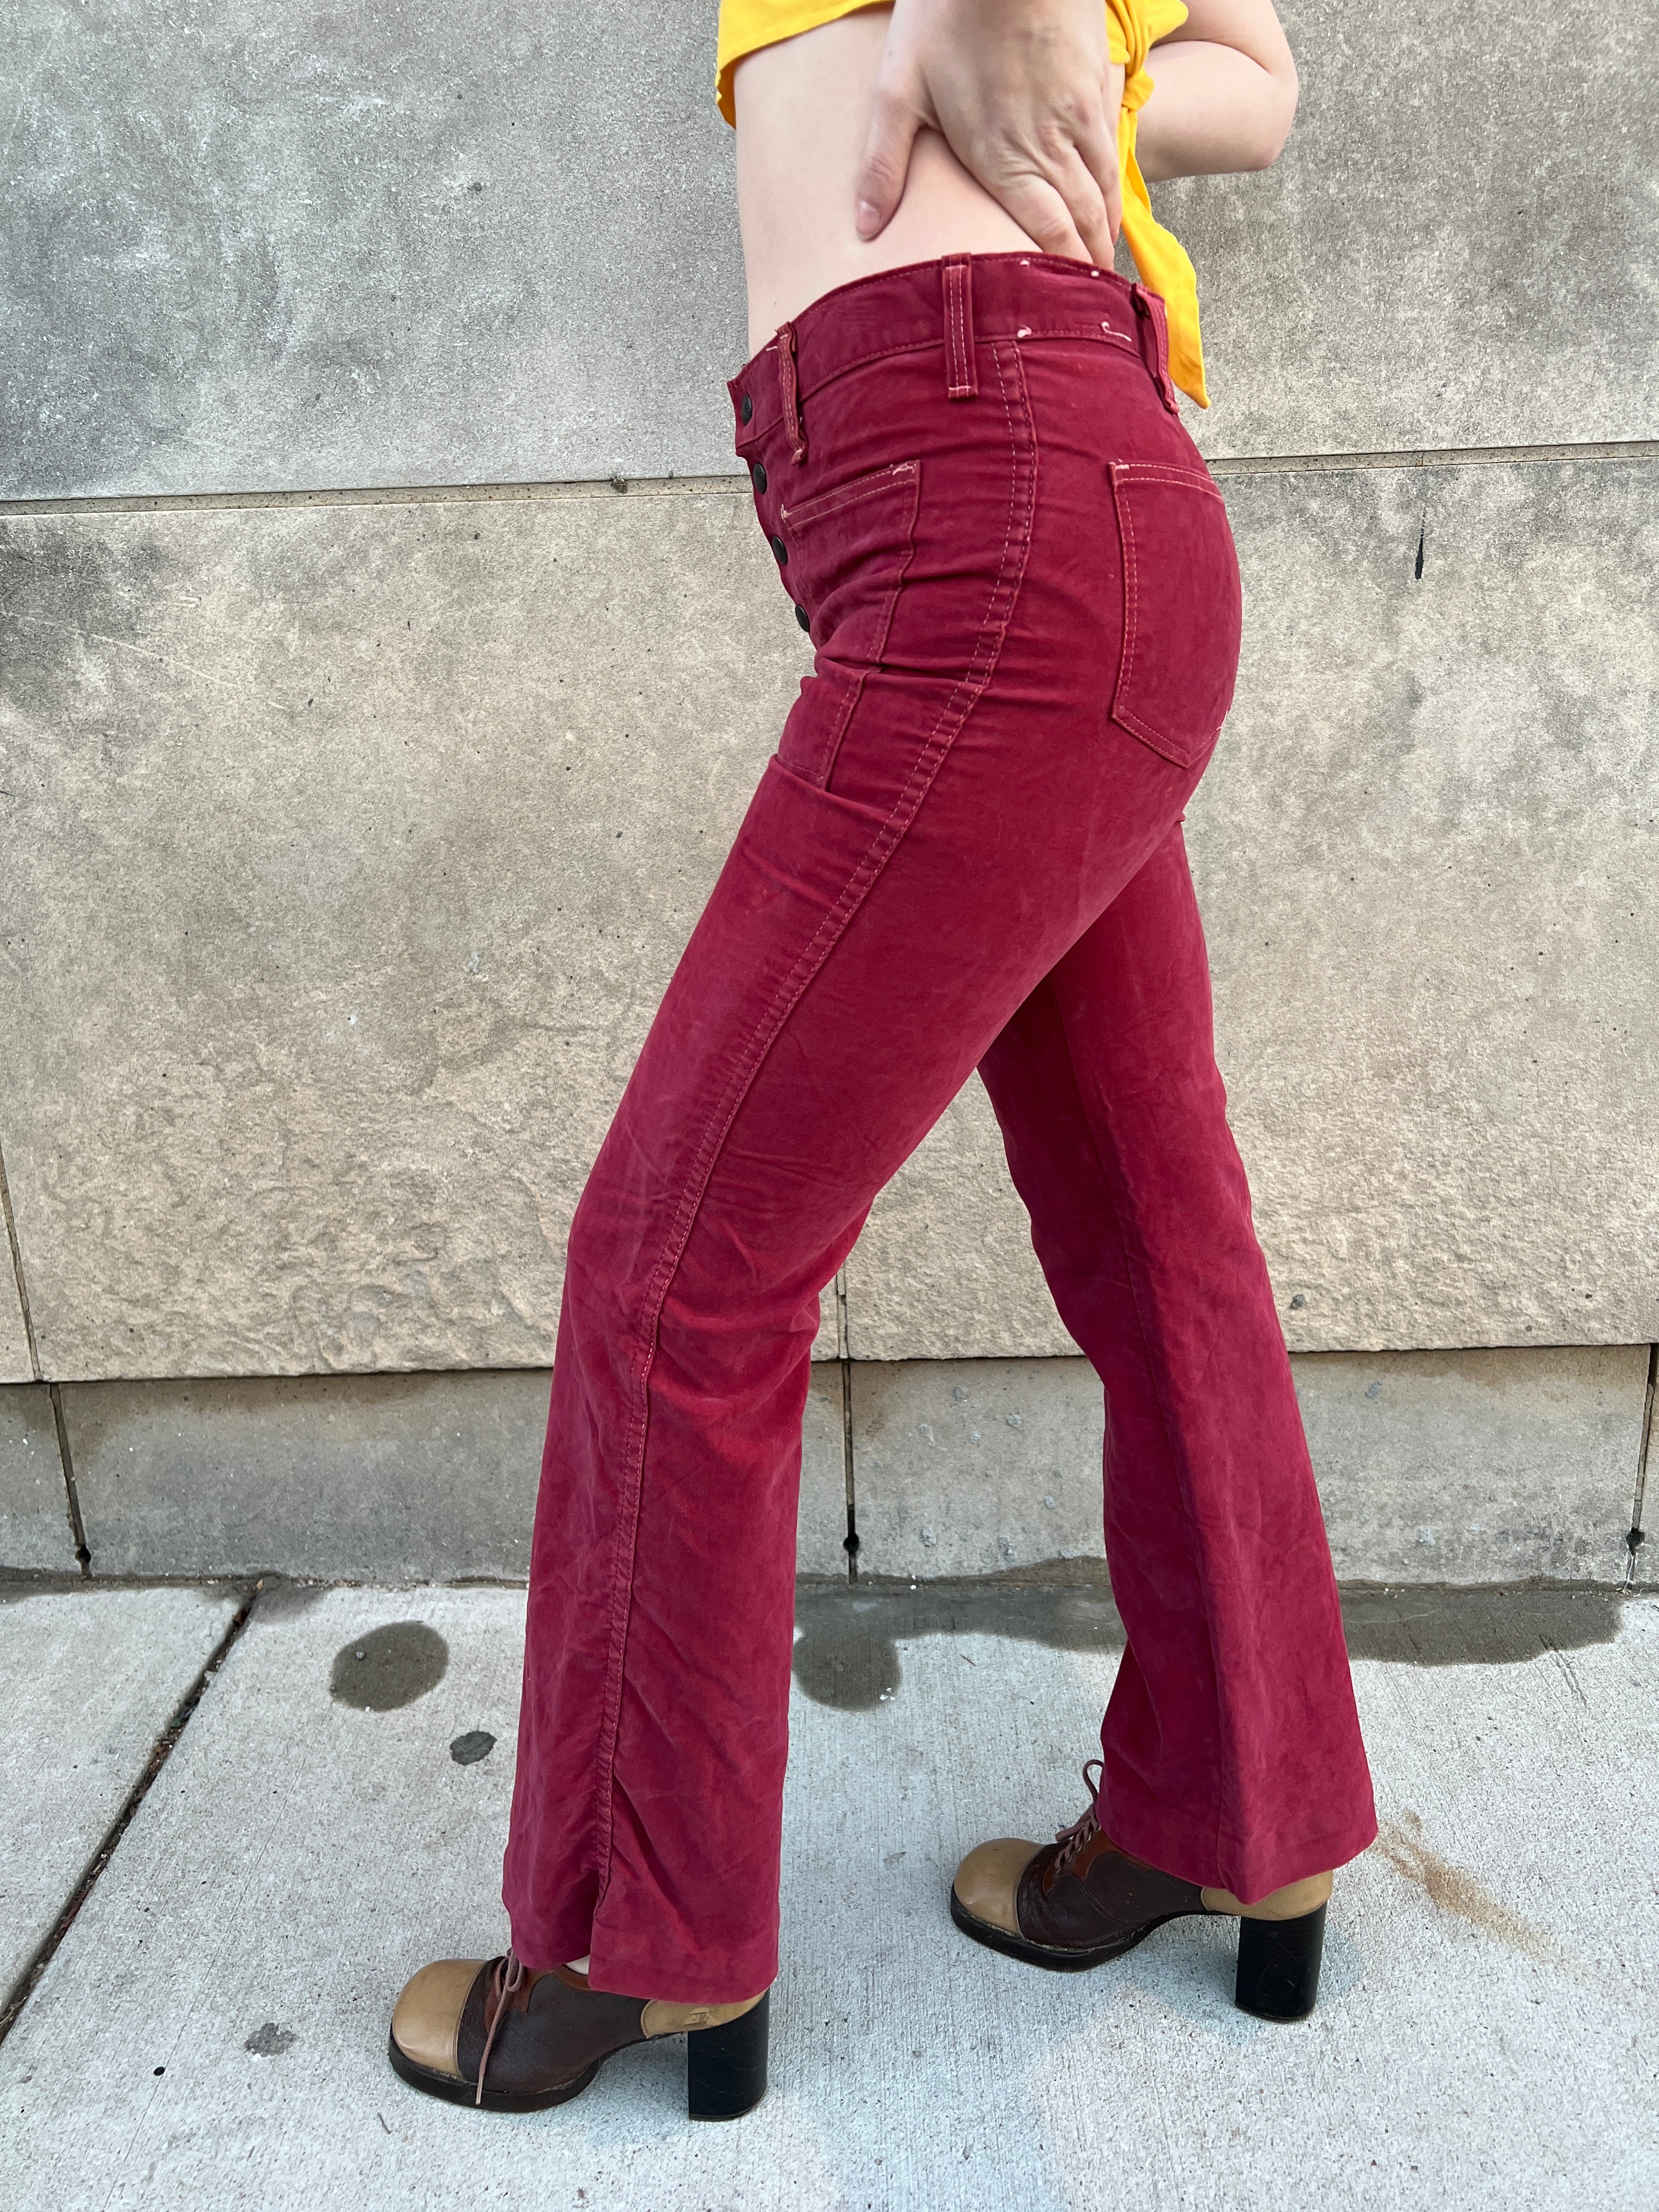 Buy trouser bell bottoms pant for women online in India